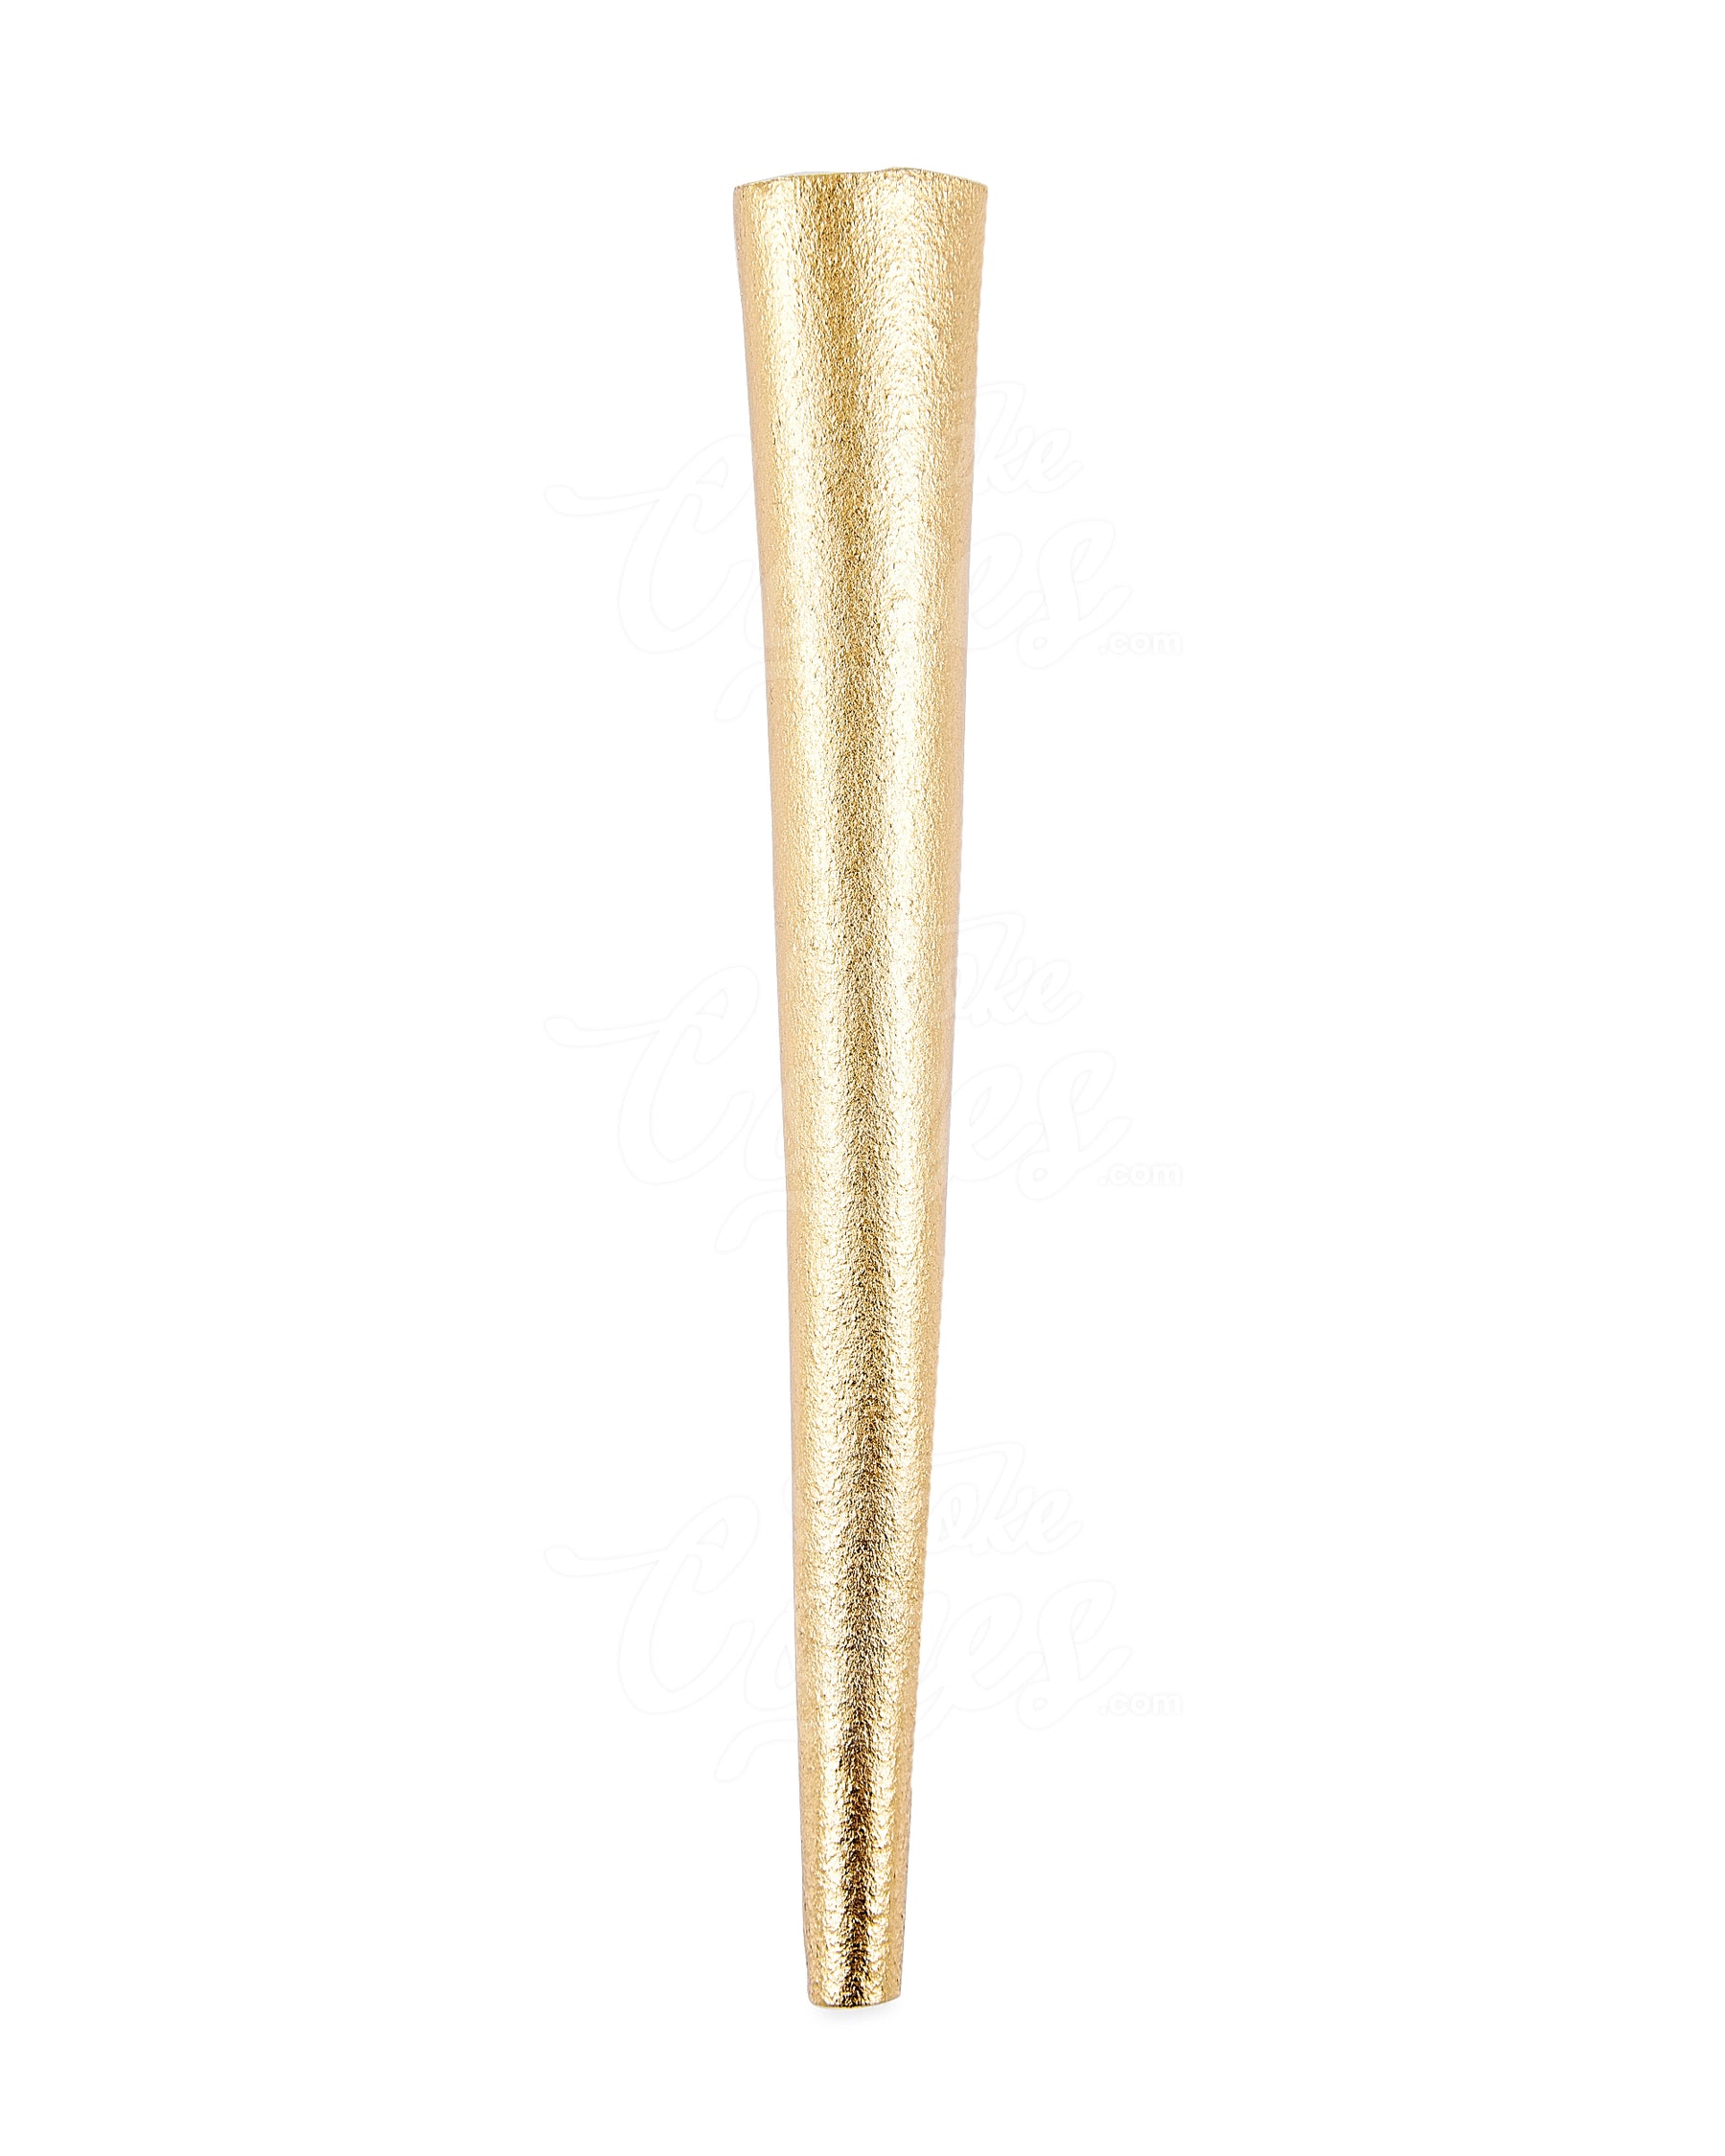 Kush 24K Gold Hemp King Size Pre Rolled Cones w/ Filter Tip 8/Box - 3